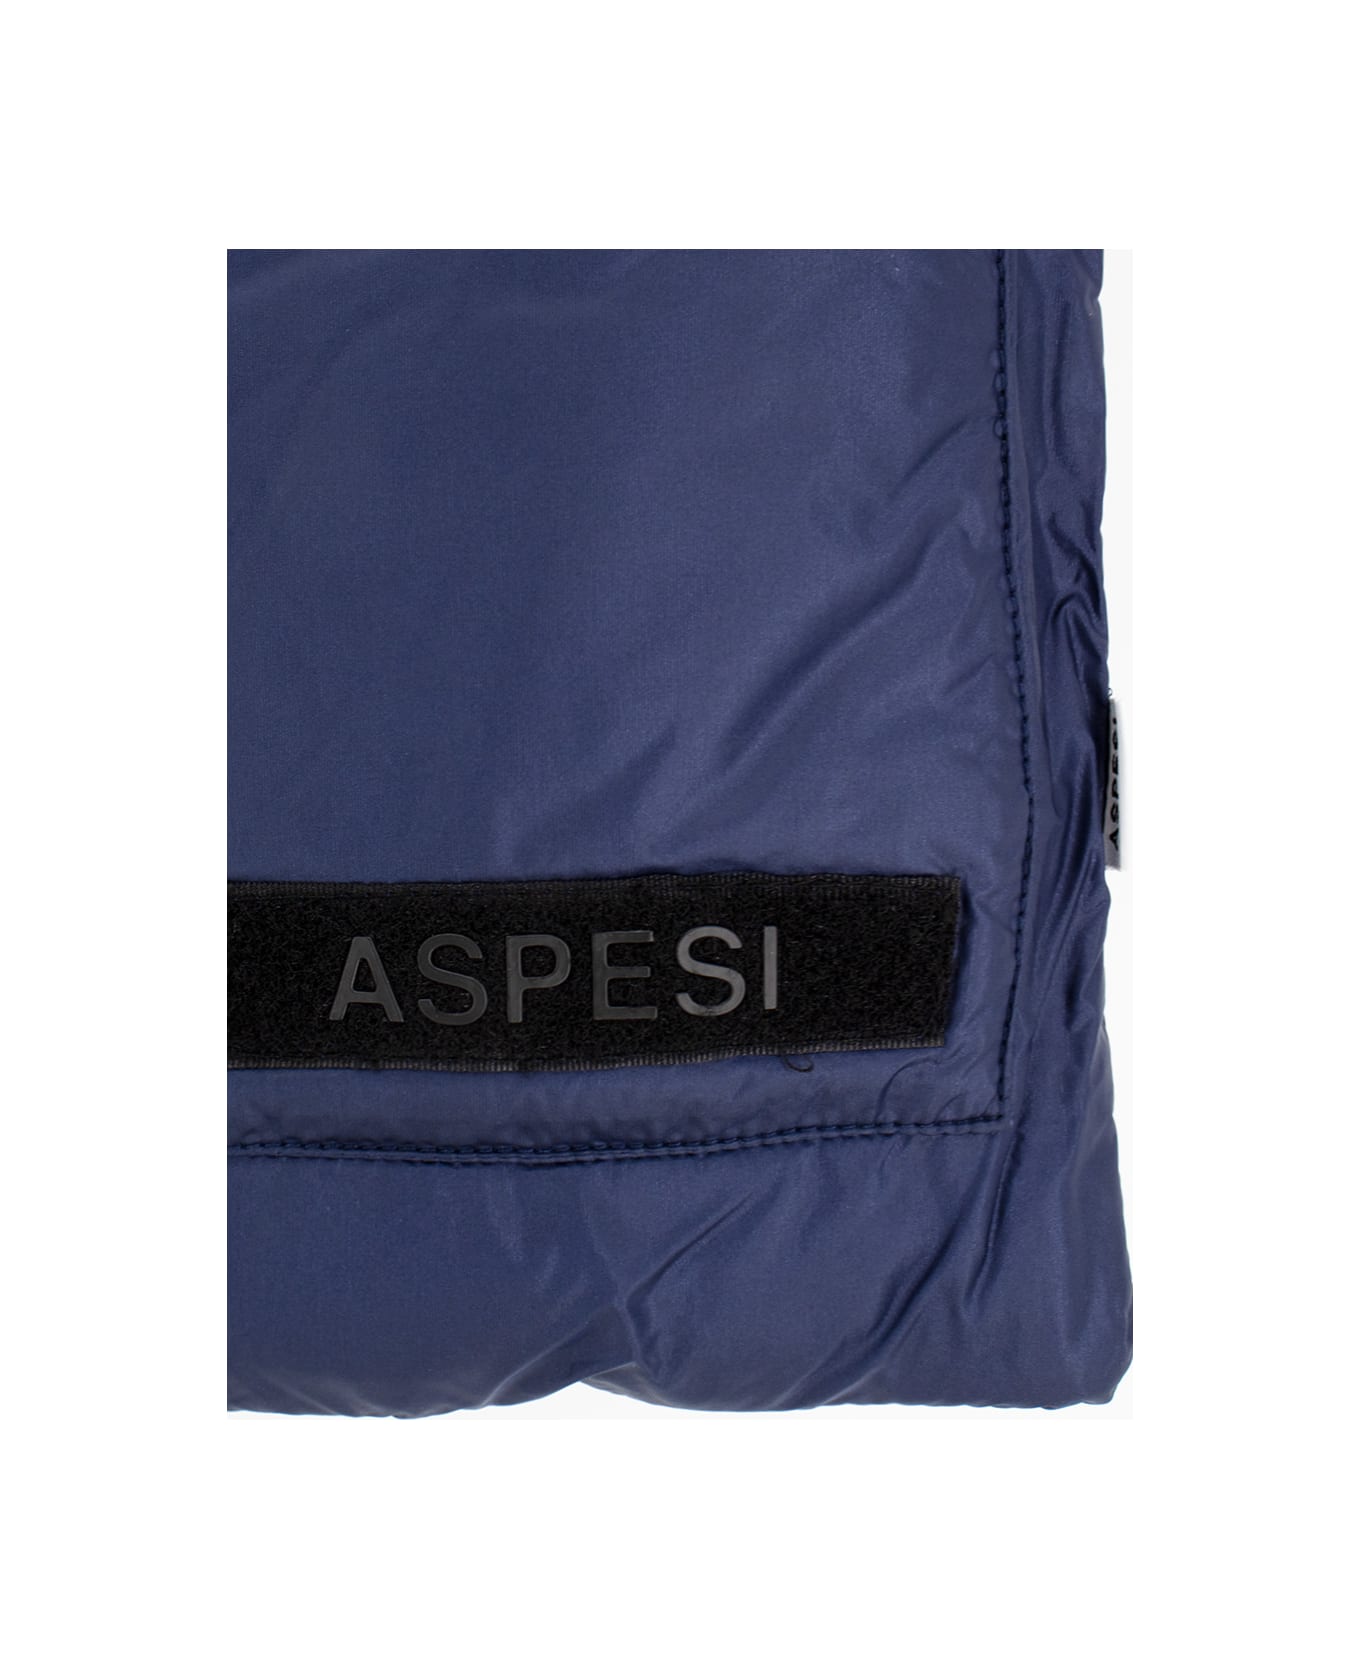 Aspesi Bag - BLUE